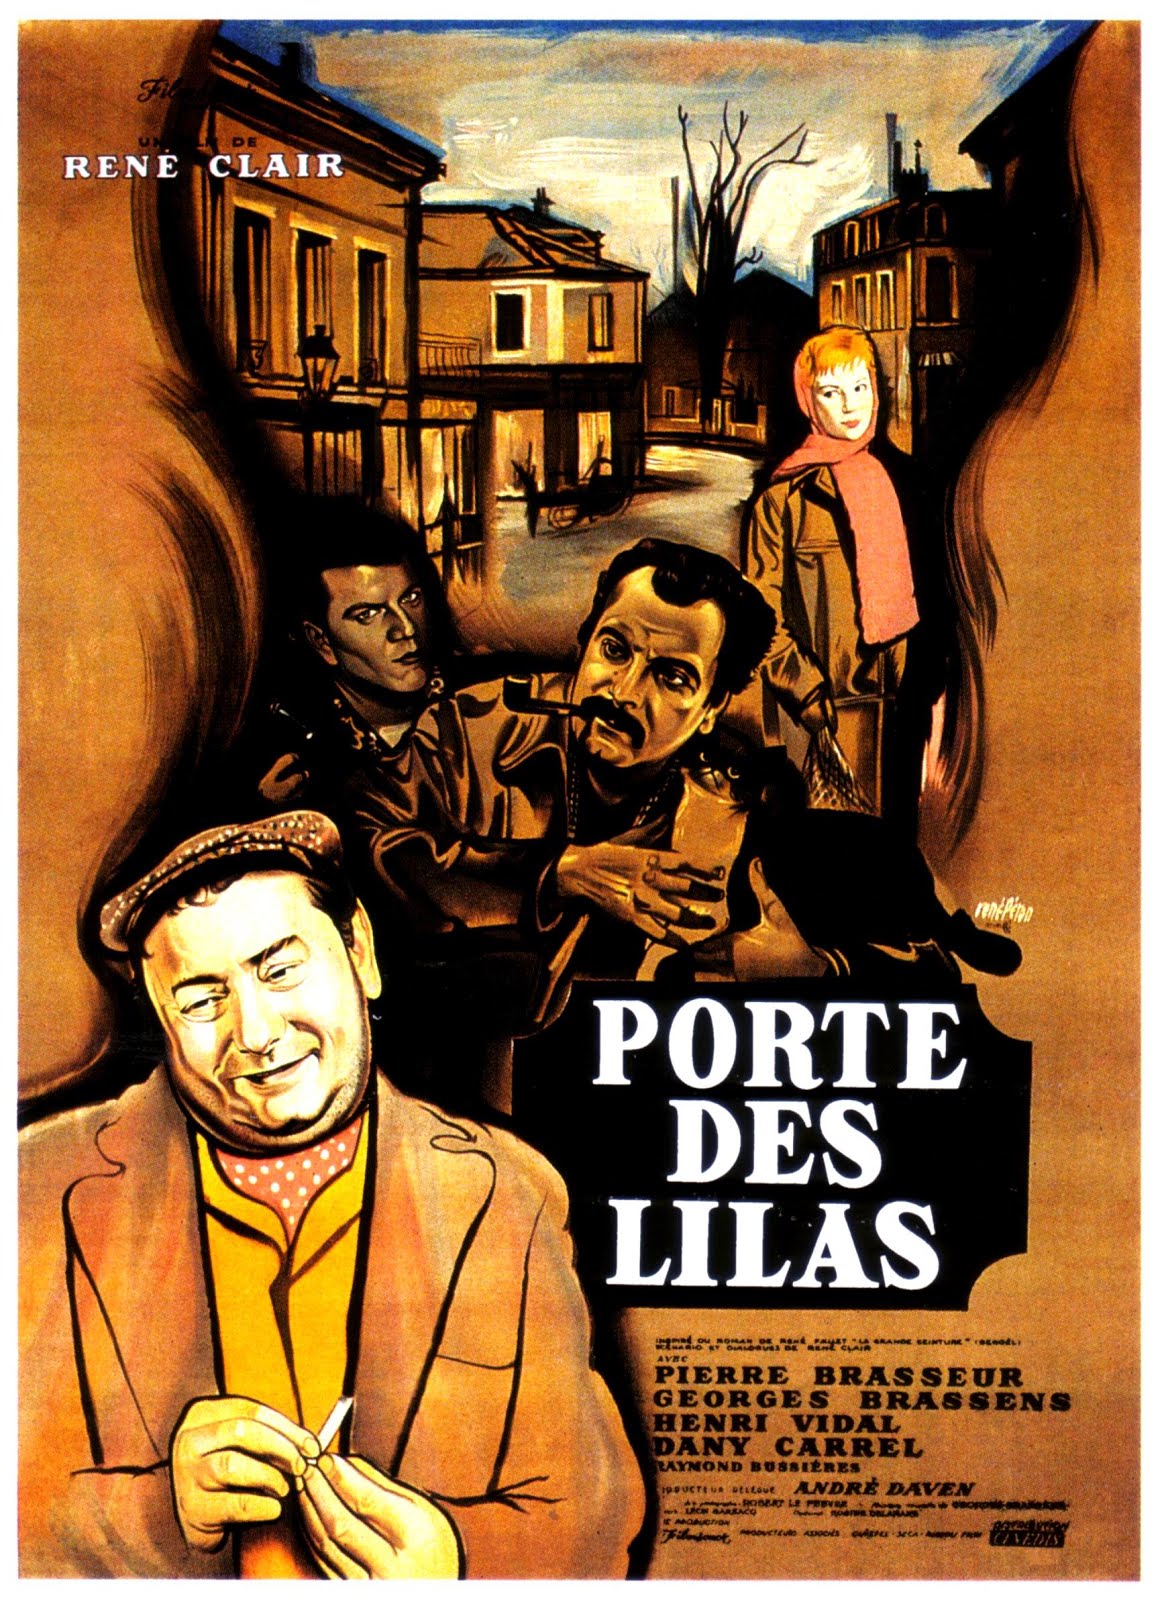 Porte des Lilas (1957) René Clair - Porte des Lilas (03.12.1956 / 08.02.1957)